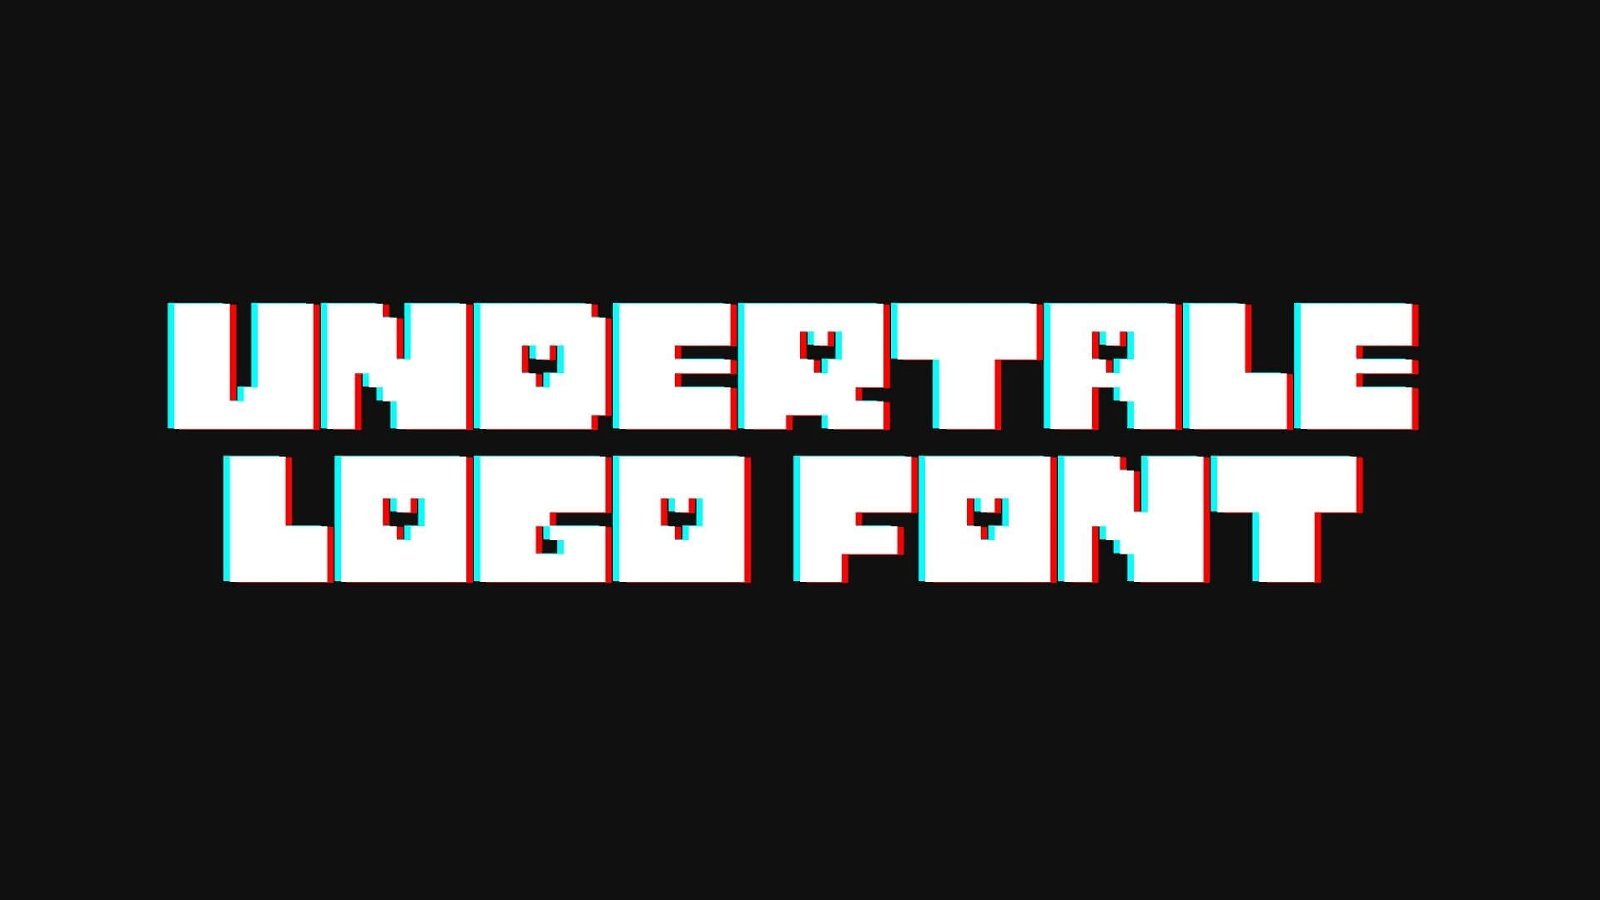 Undertale Logo Font